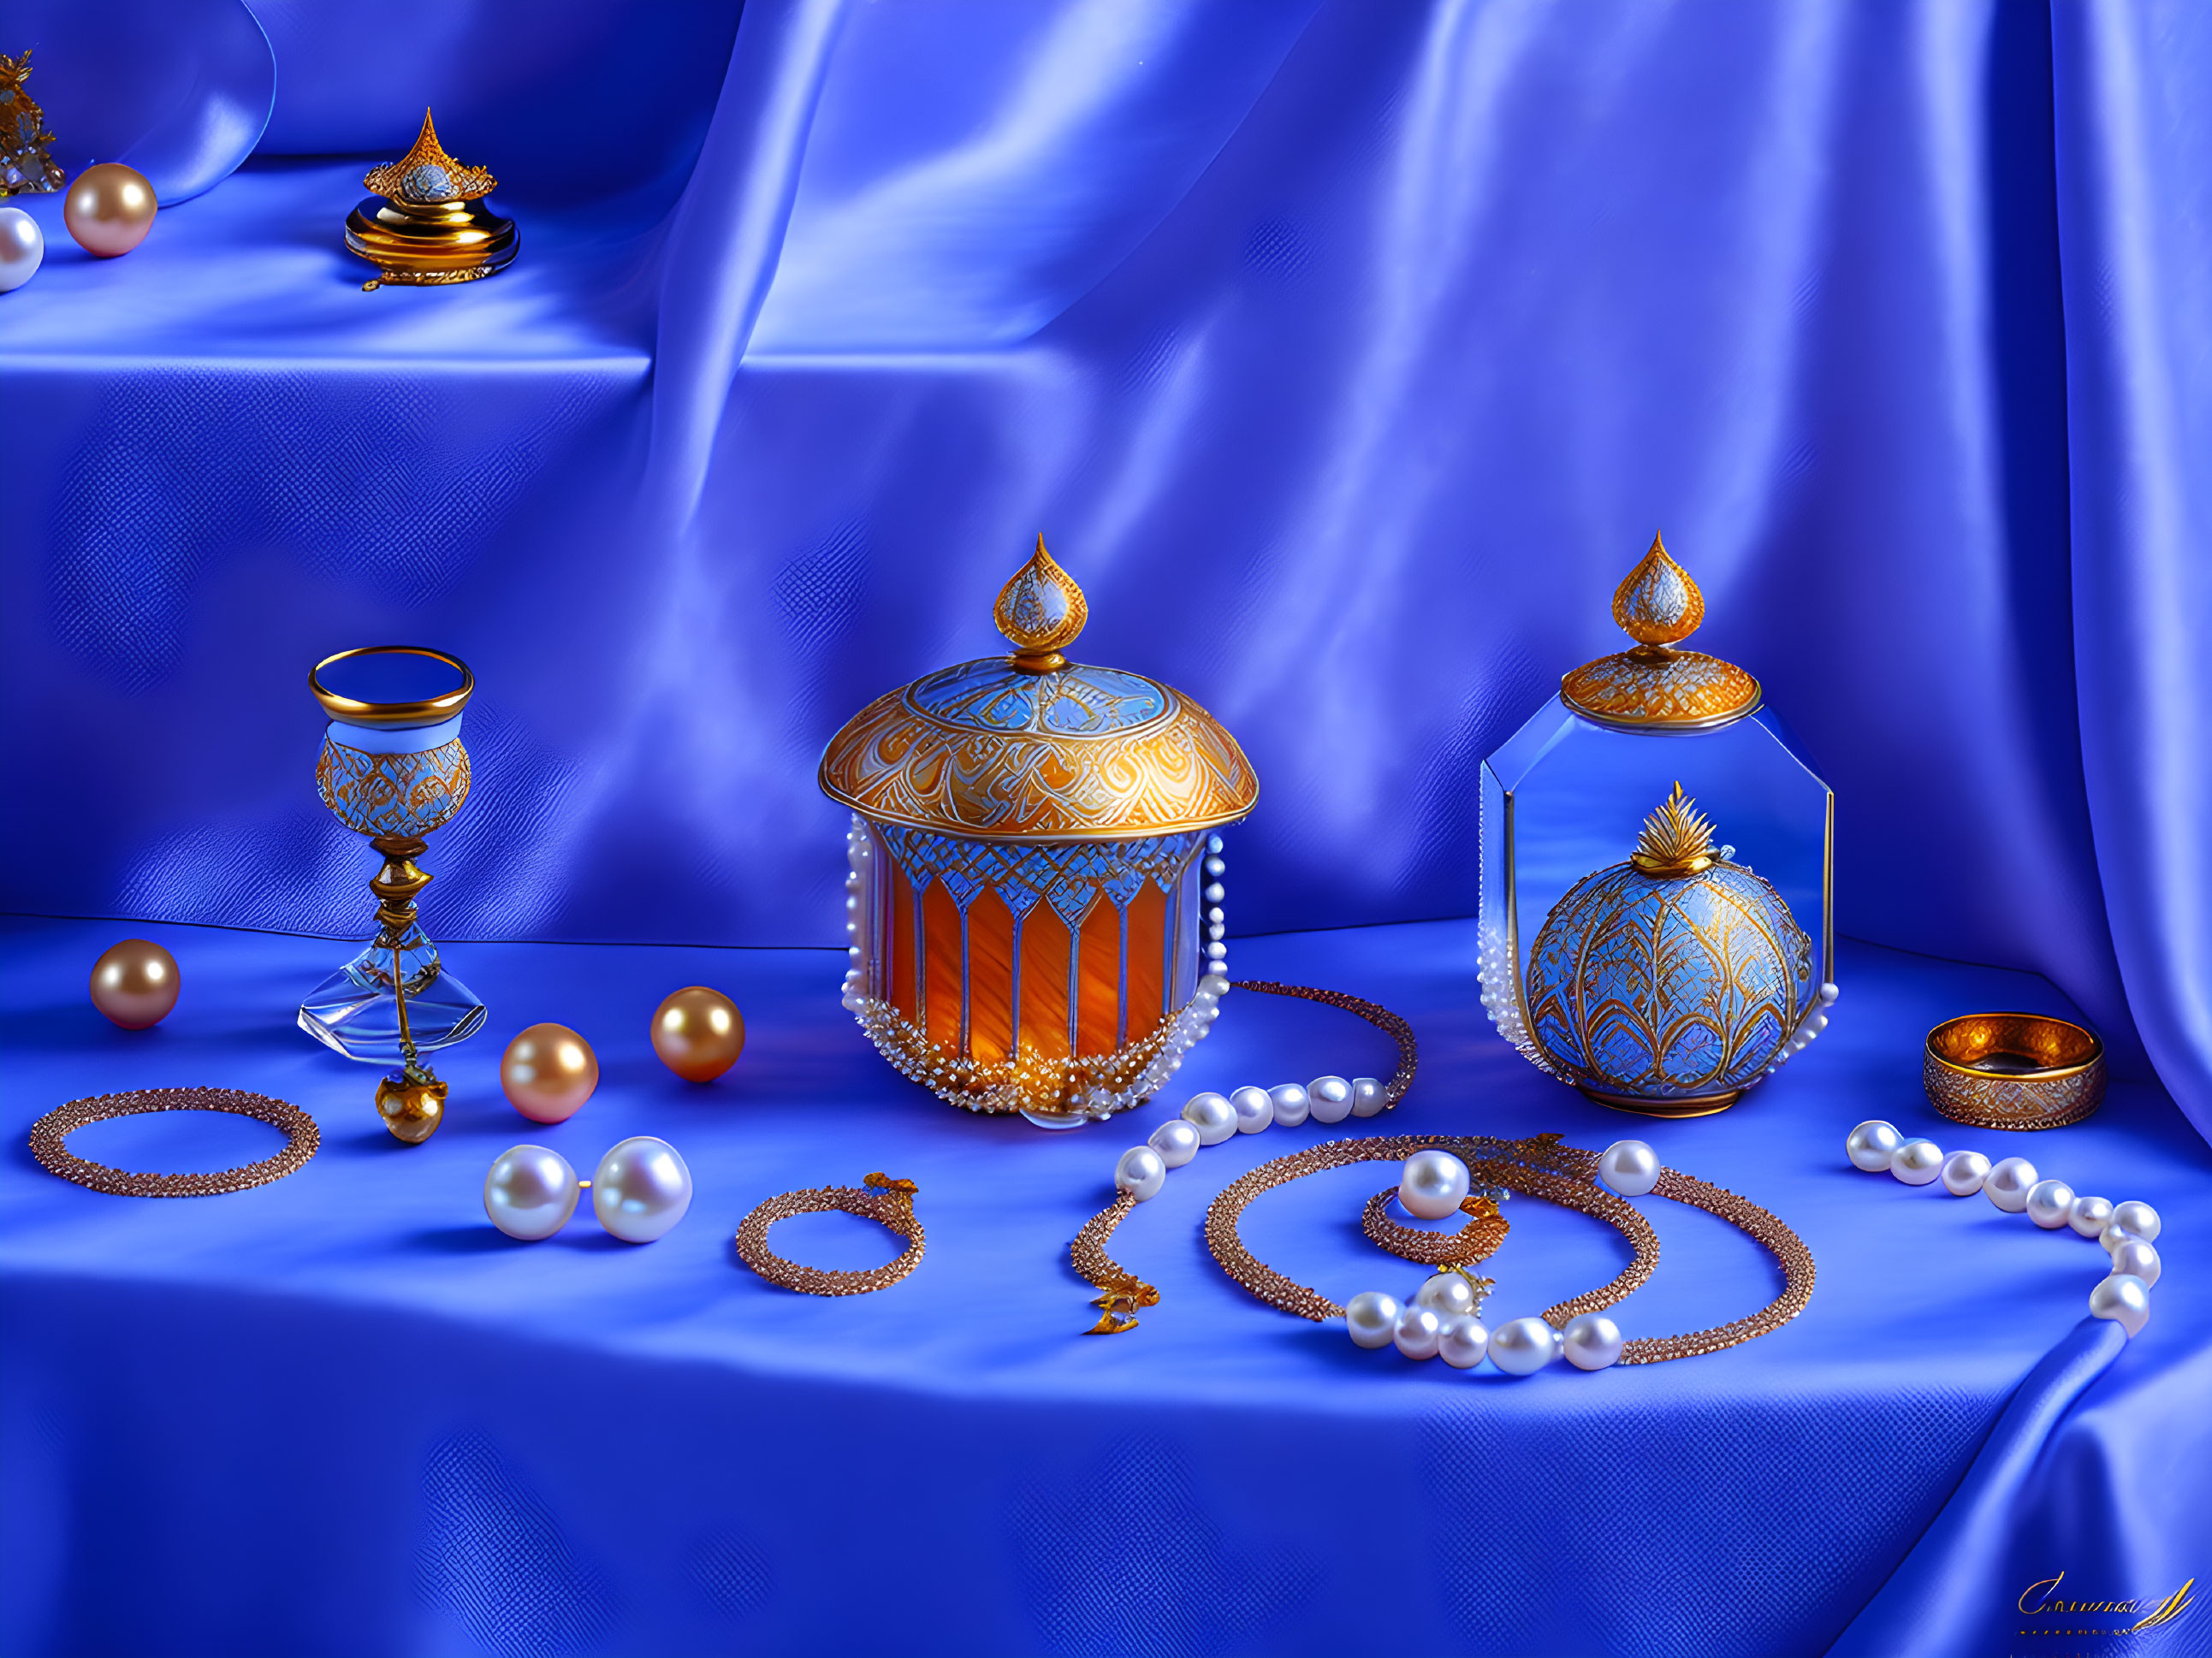 Royal Elegance: Blue and Gold Treasures